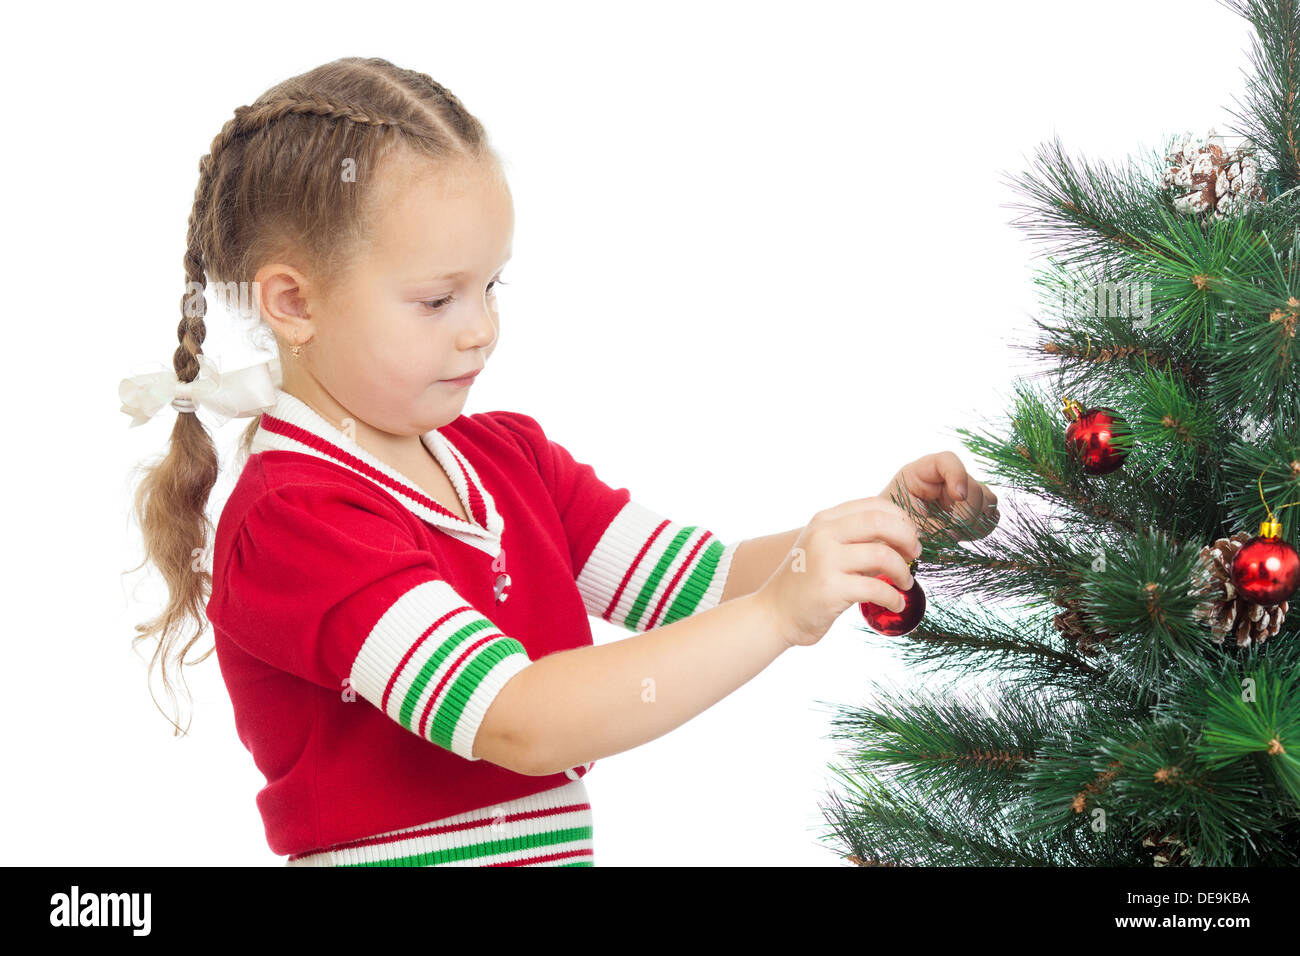 pretty preschool girl decorating Christmas tree isolated on white Stock Photo